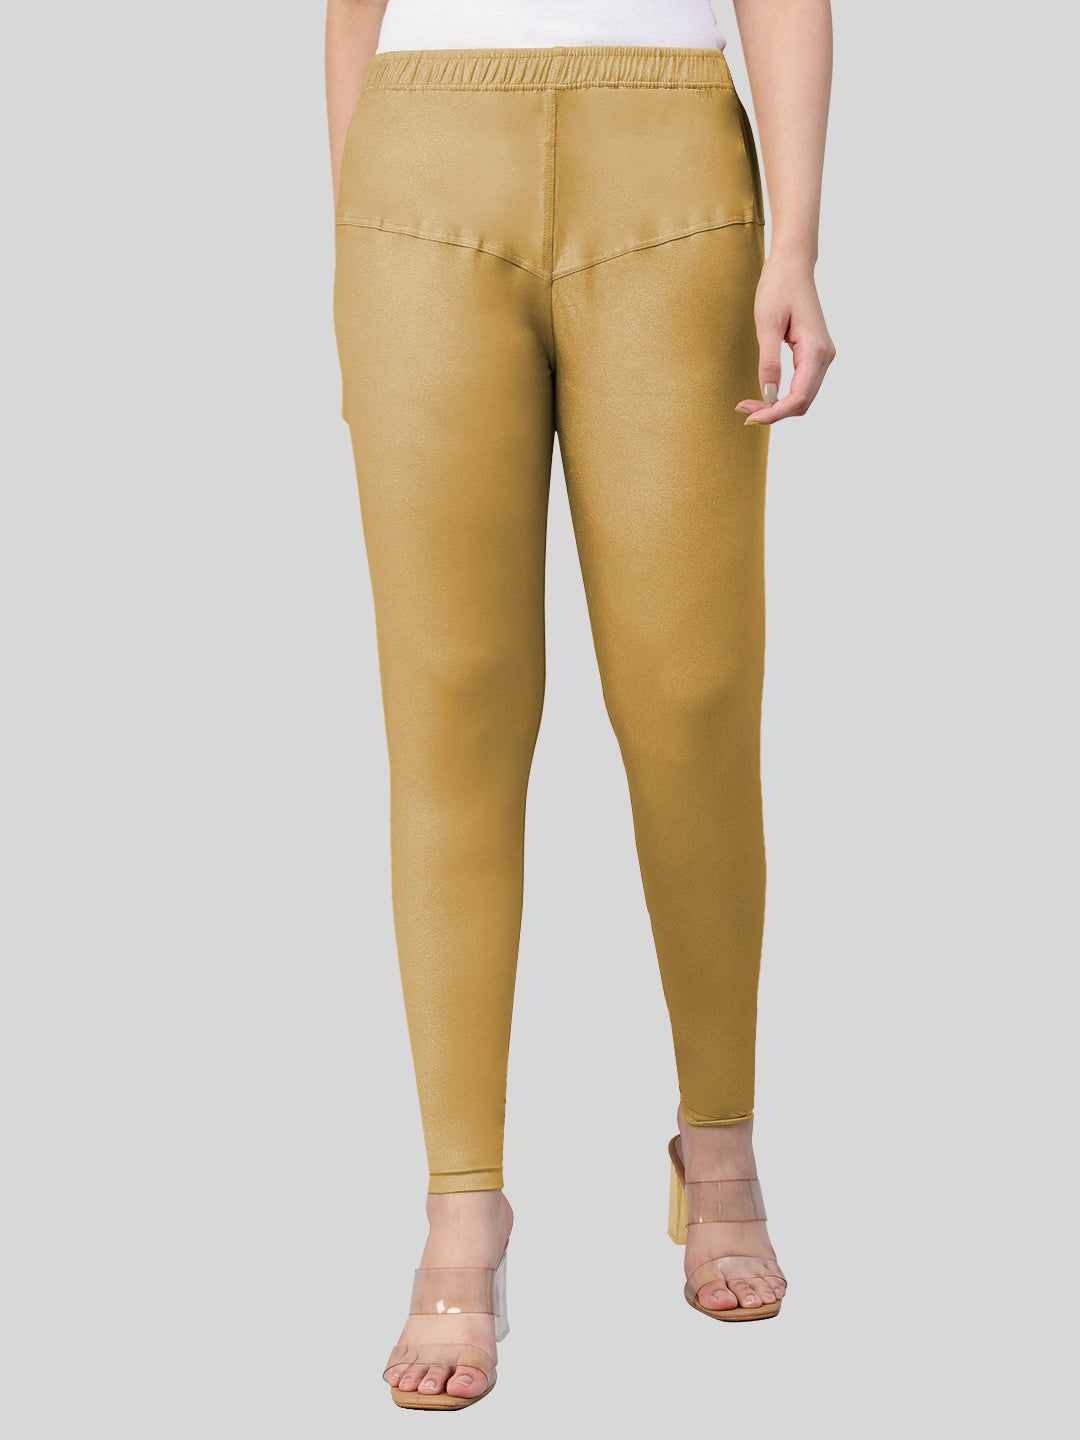 Light gold shimmer plain leggings - Charu Boutique - 1049408